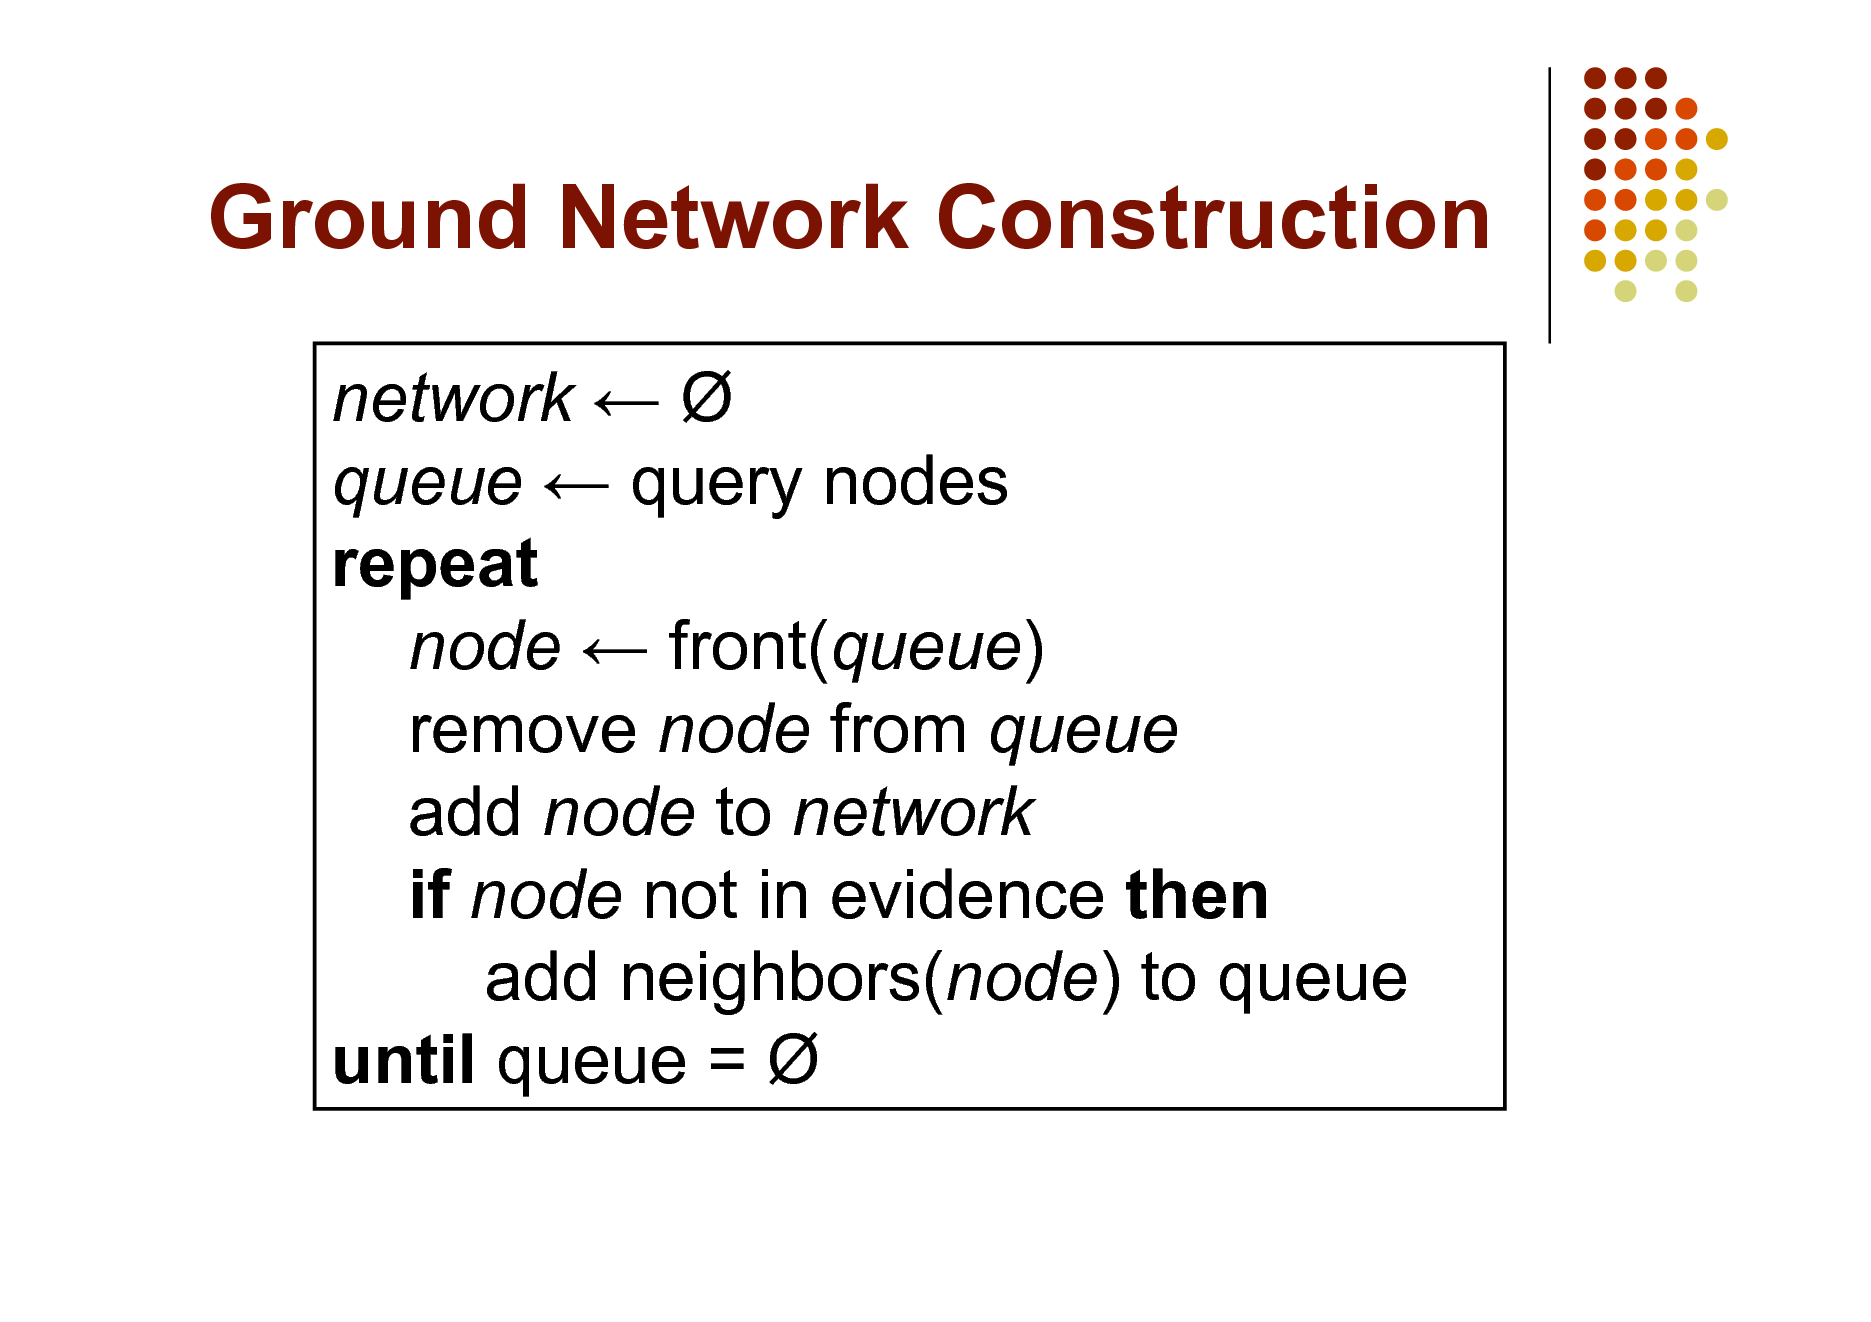 Slide: Ground Network Construction
network   queue  query nodes repeat node  front(queue) remove node from queue add node to network if node not in evidence then add neighbors(node) to queue until queue = 

